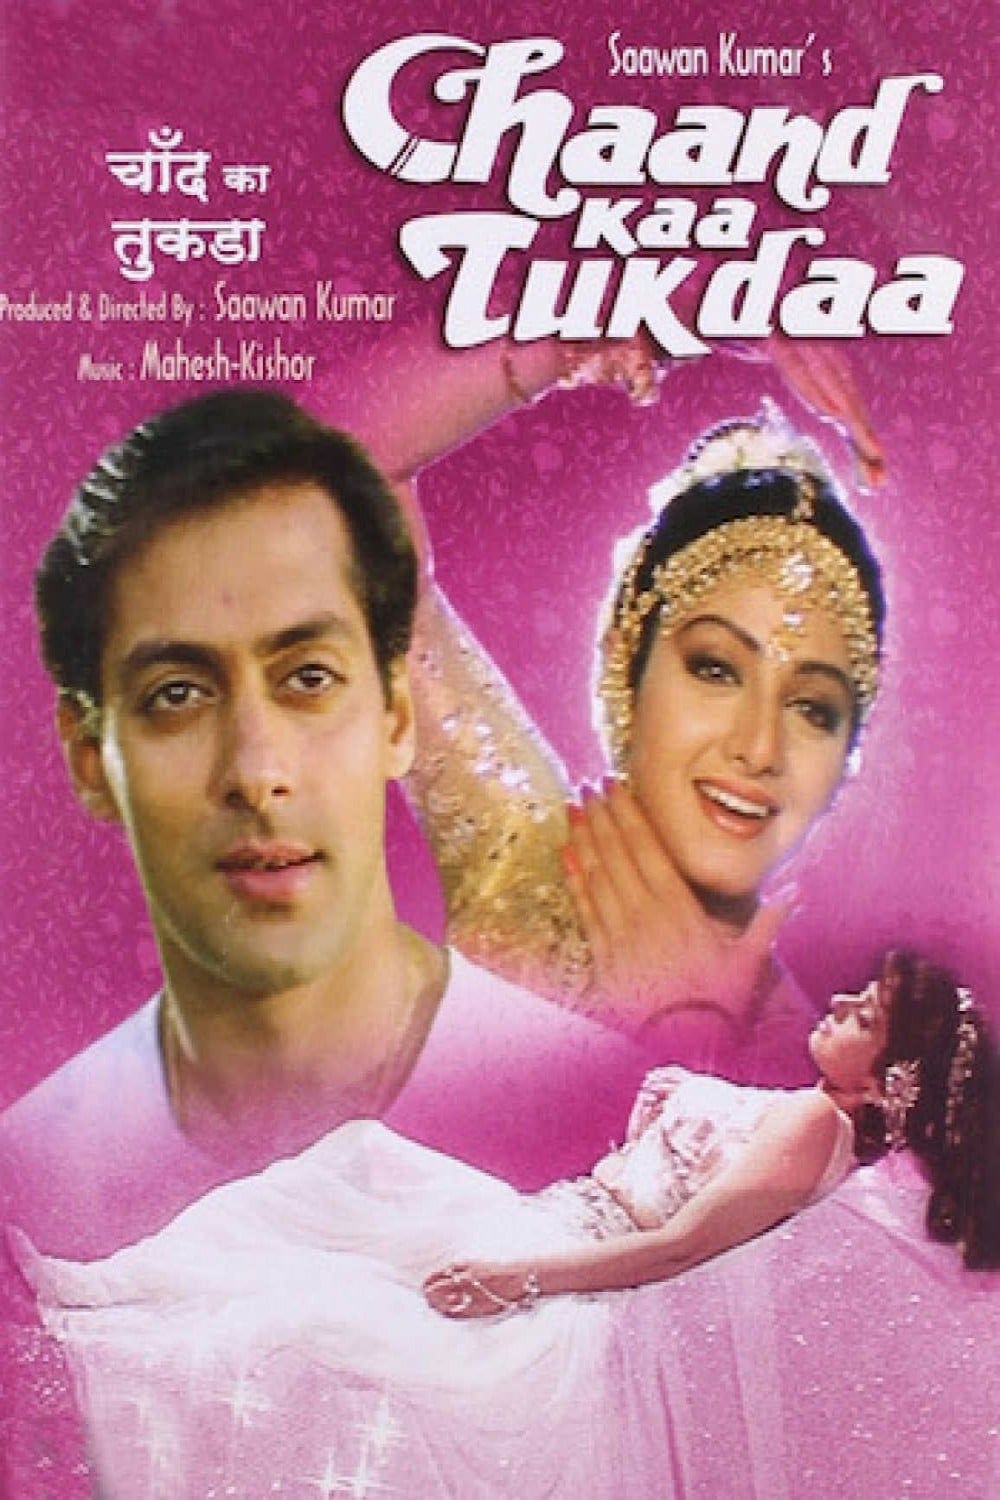 Poster for the movie "Chaand Kaa Tukdaa"